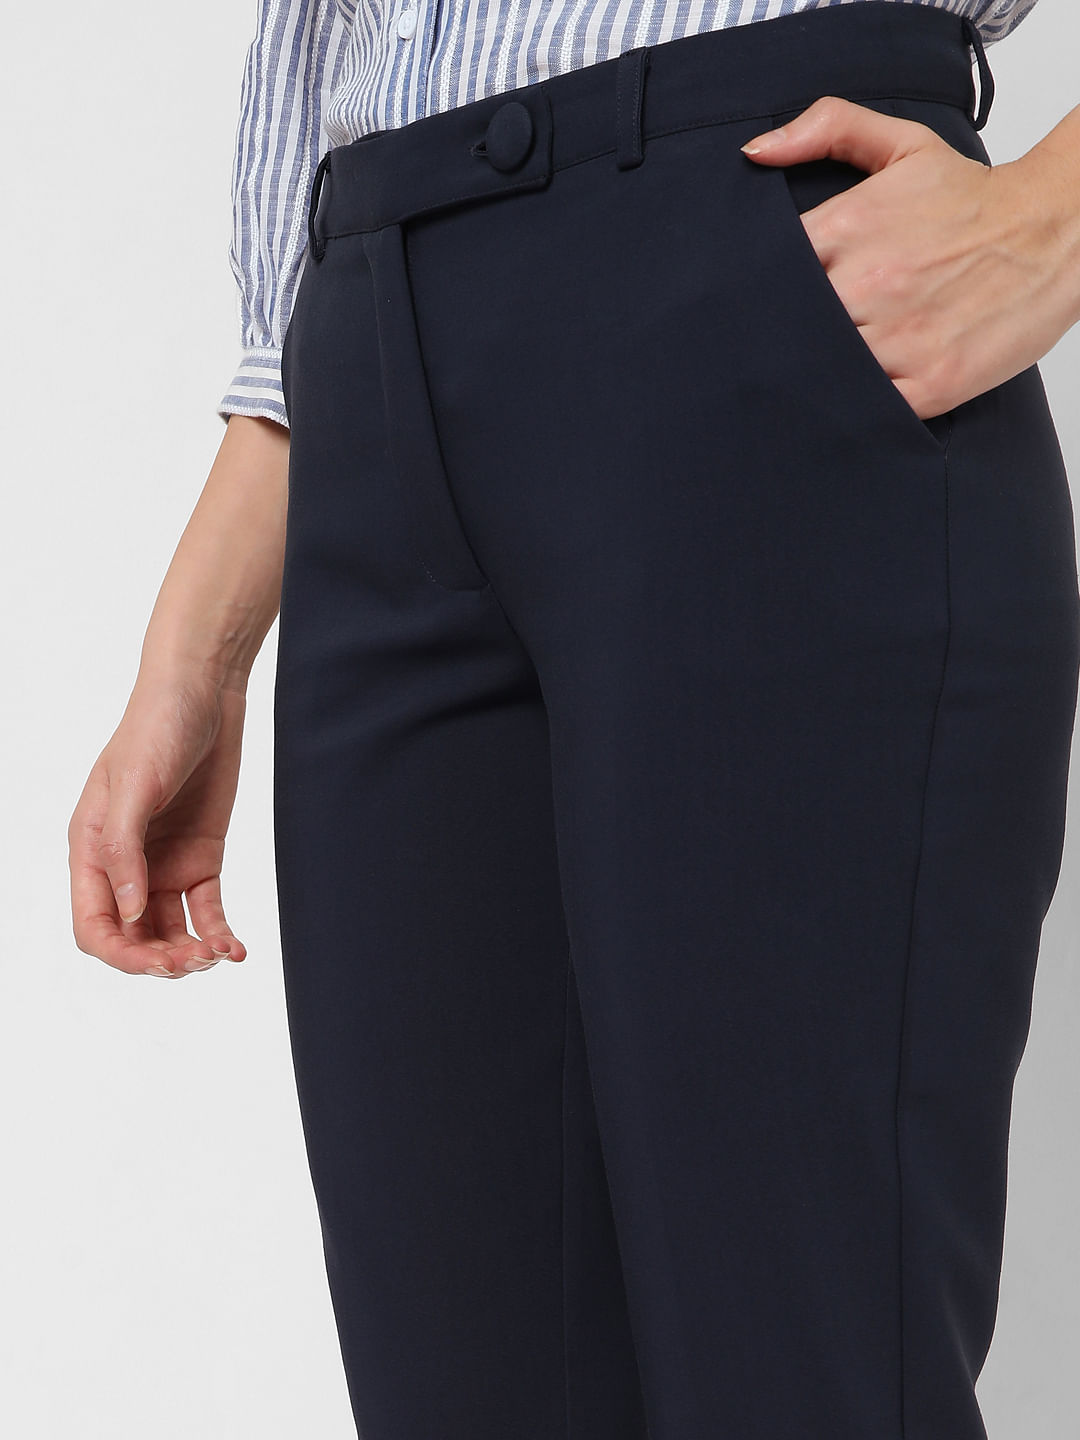 Buy Peter England Elite Navy Blue Slim Fit Checks Trousers for Mens Online   Tata CLiQ